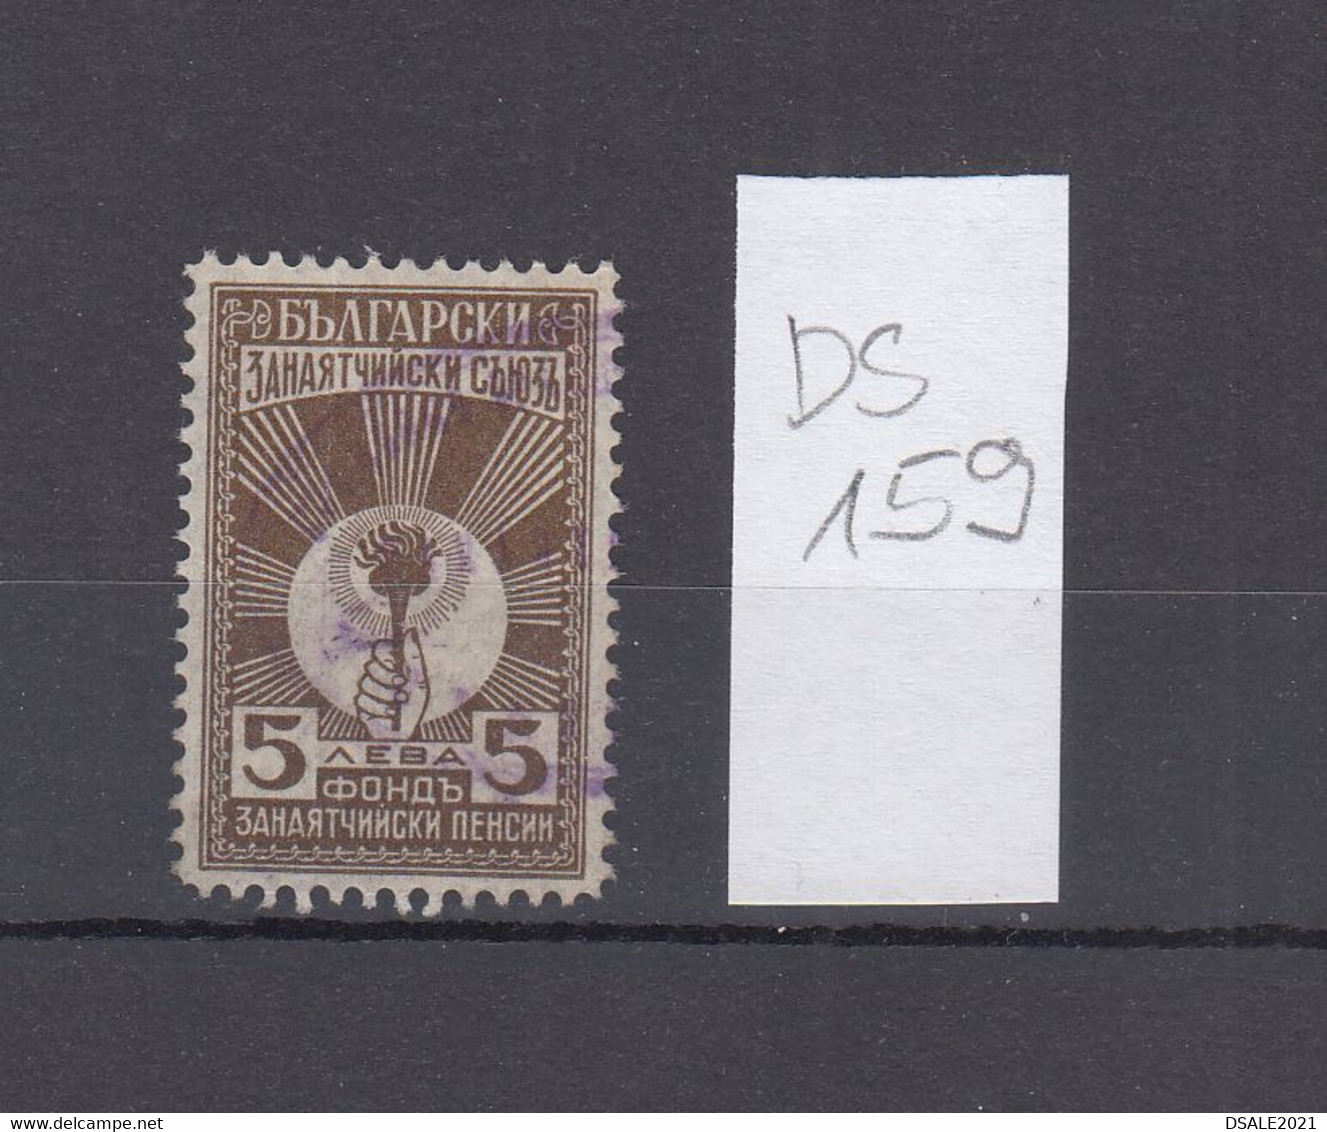 Bulgaria Bulgarie Bulgarije 1930s Craftsman Society 5Lv. Pension Fund Fiscal Revenue Stamp Bulgarian Revenues (ds159) - Dienstmarken